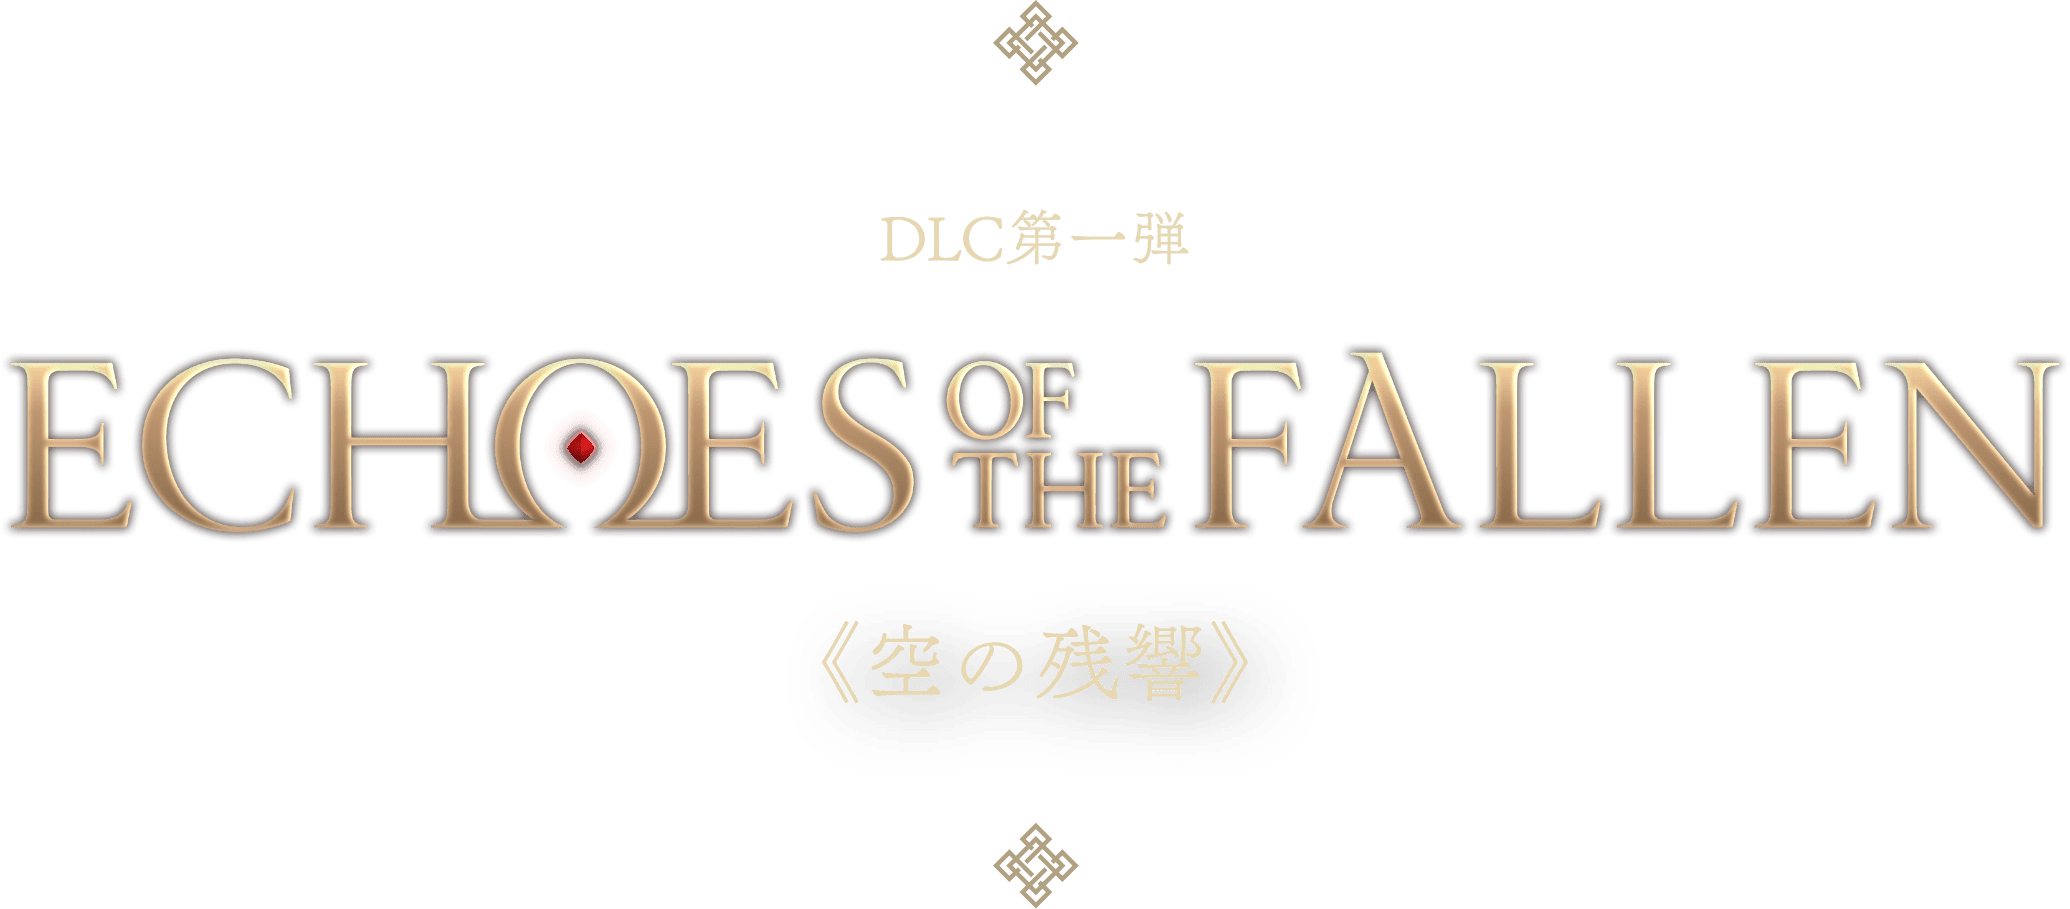 DLC第一弾 Echoes of the Fallen 《空の残響》